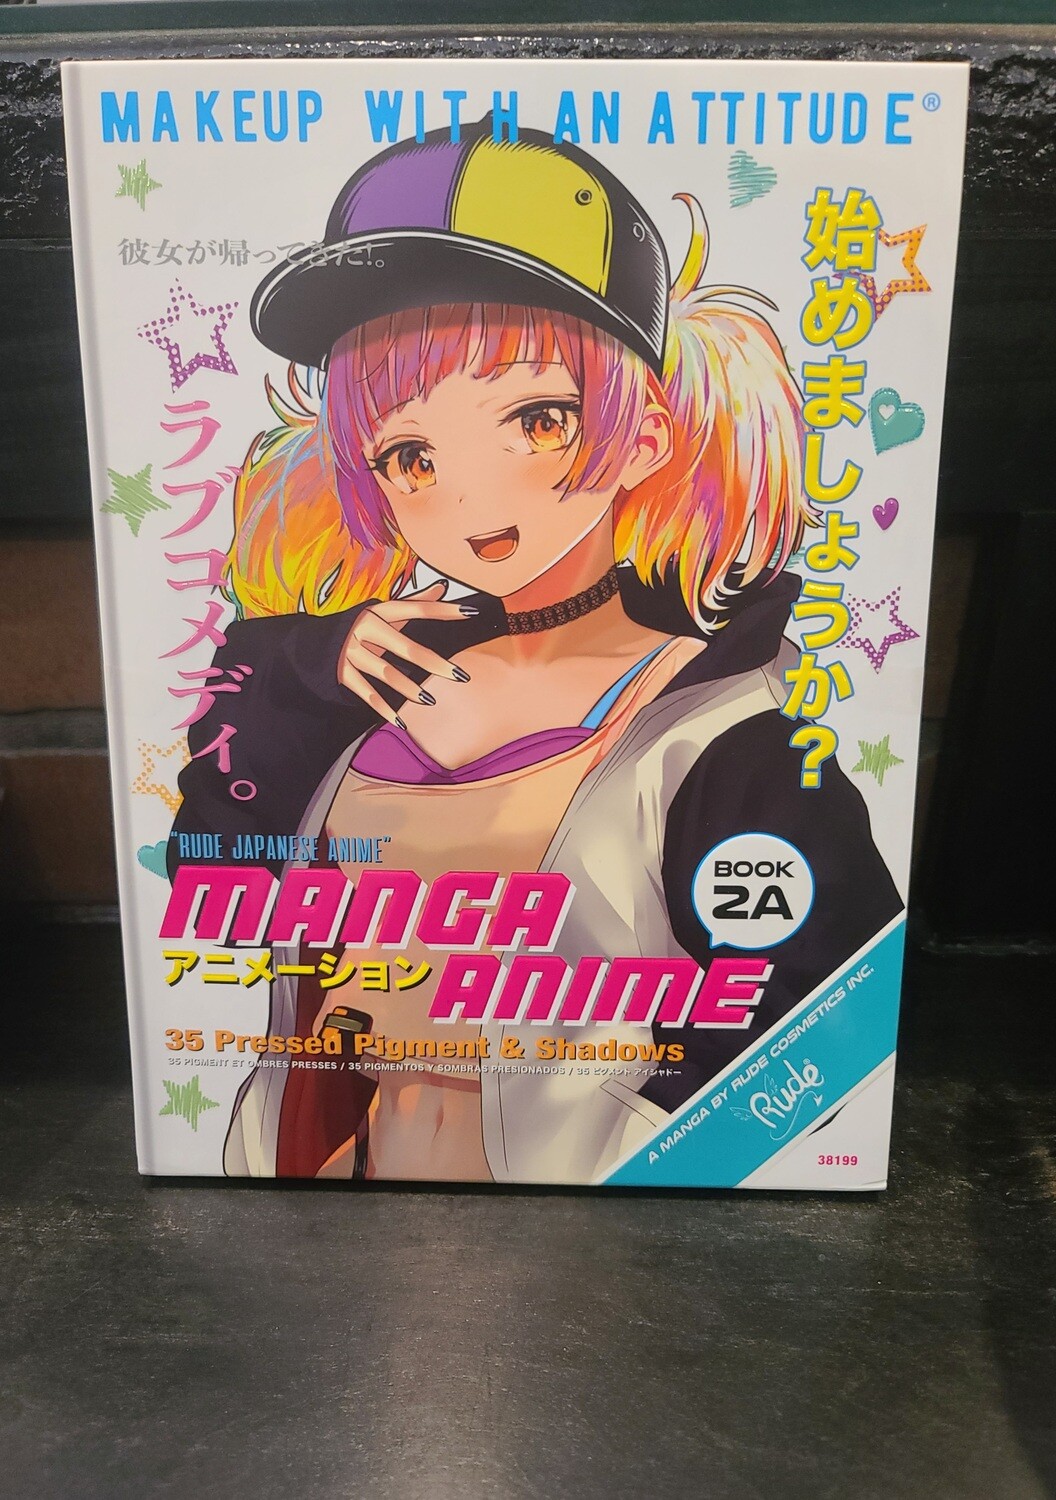 Manga Hardcover Book 2A